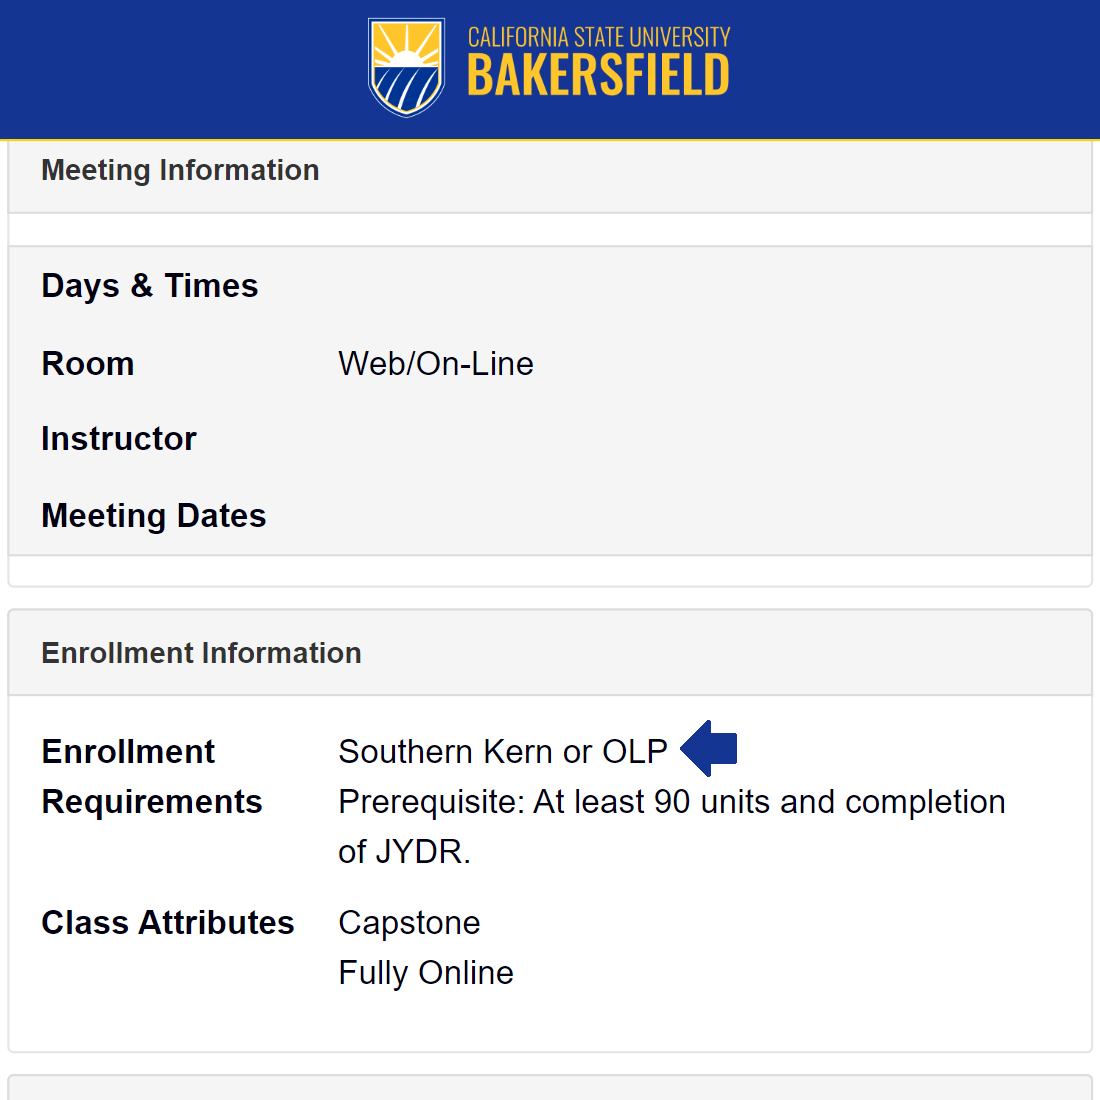 Screen shot of enrollment information for Southern Kern